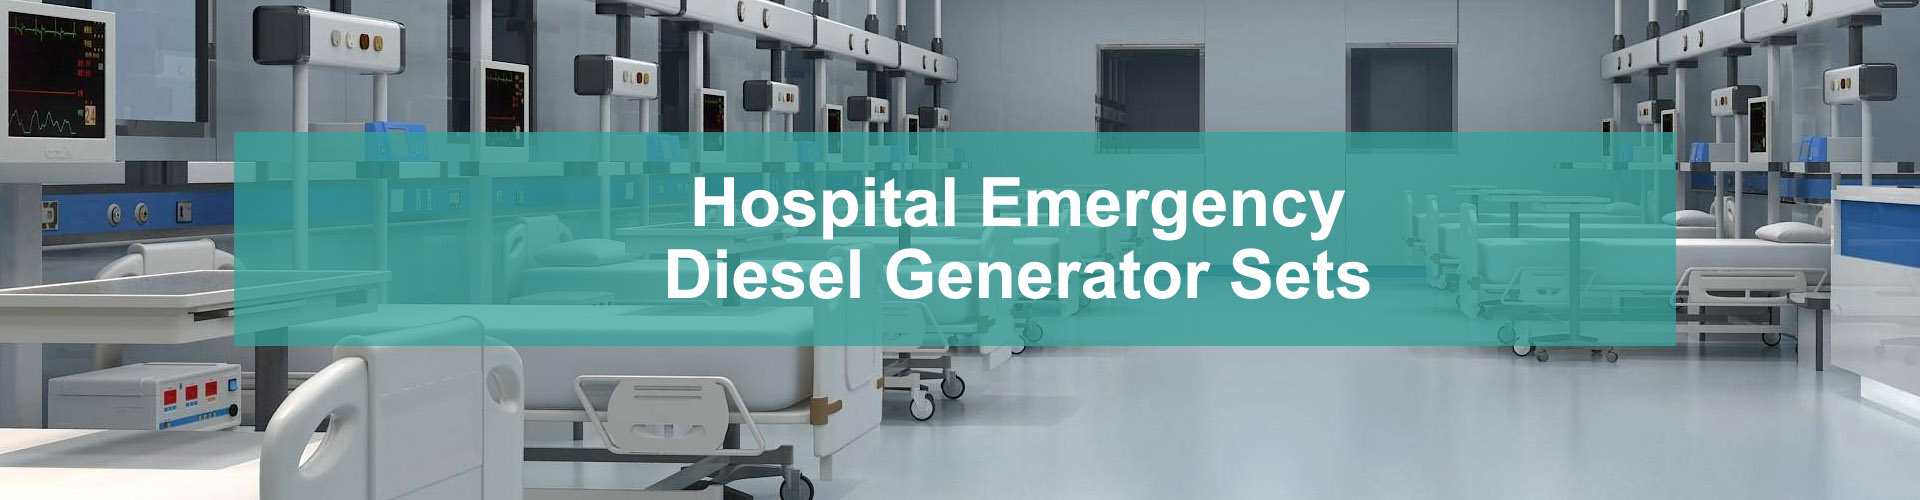 Hospital use diesel generator set Leton power stable power solution for hospital